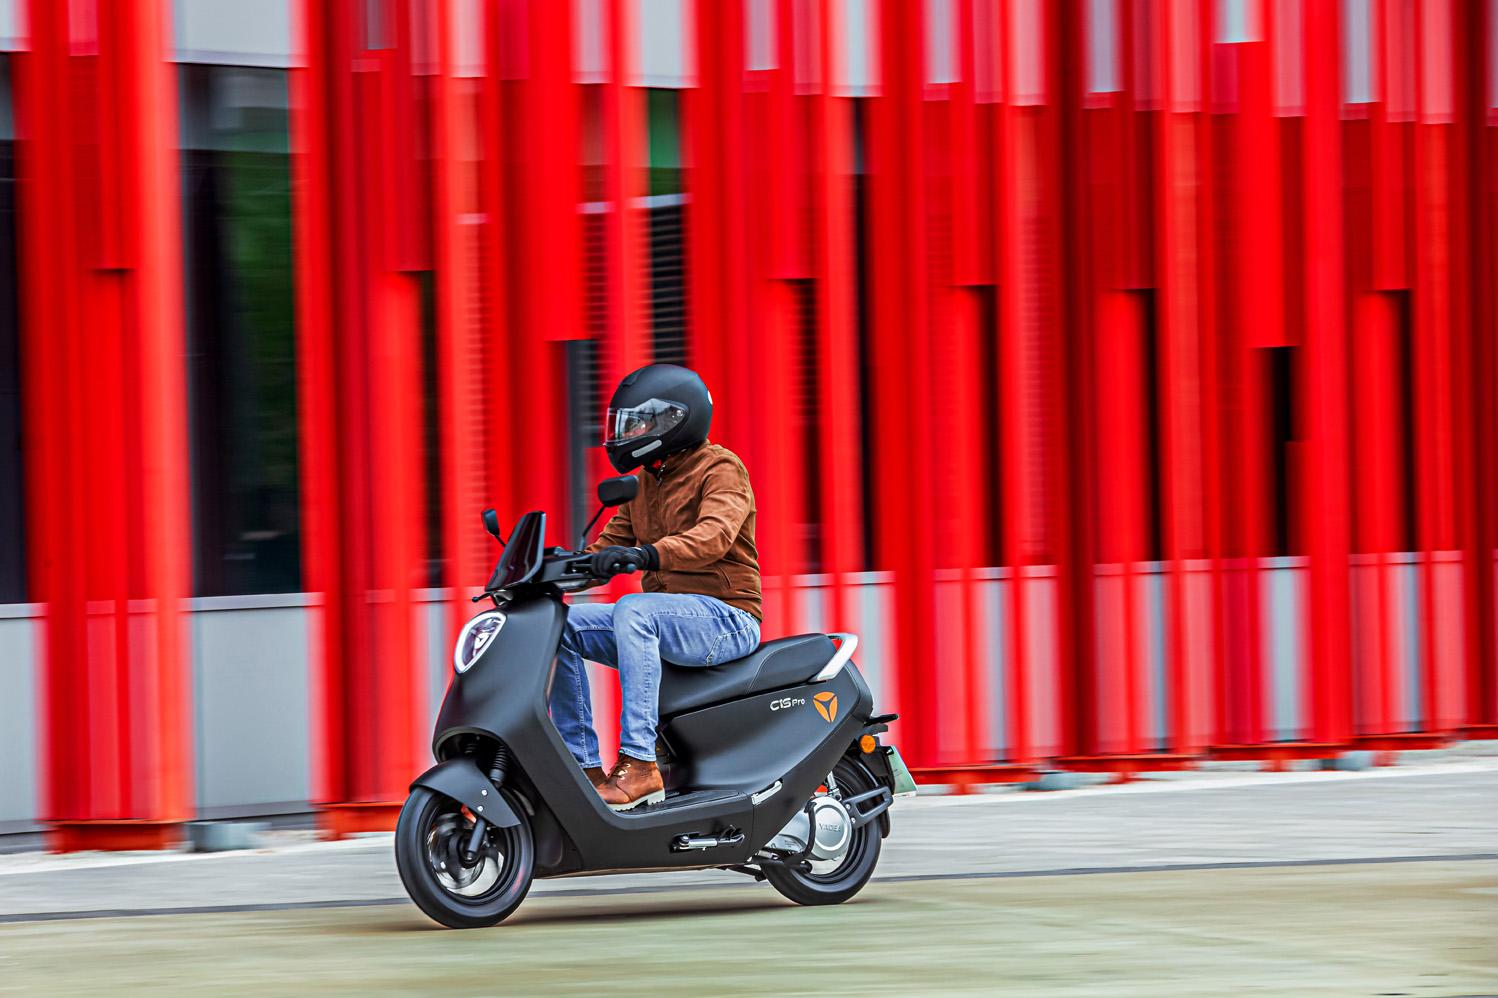 Vespa Moto Electrica Roja 3-6 años - Nanoen